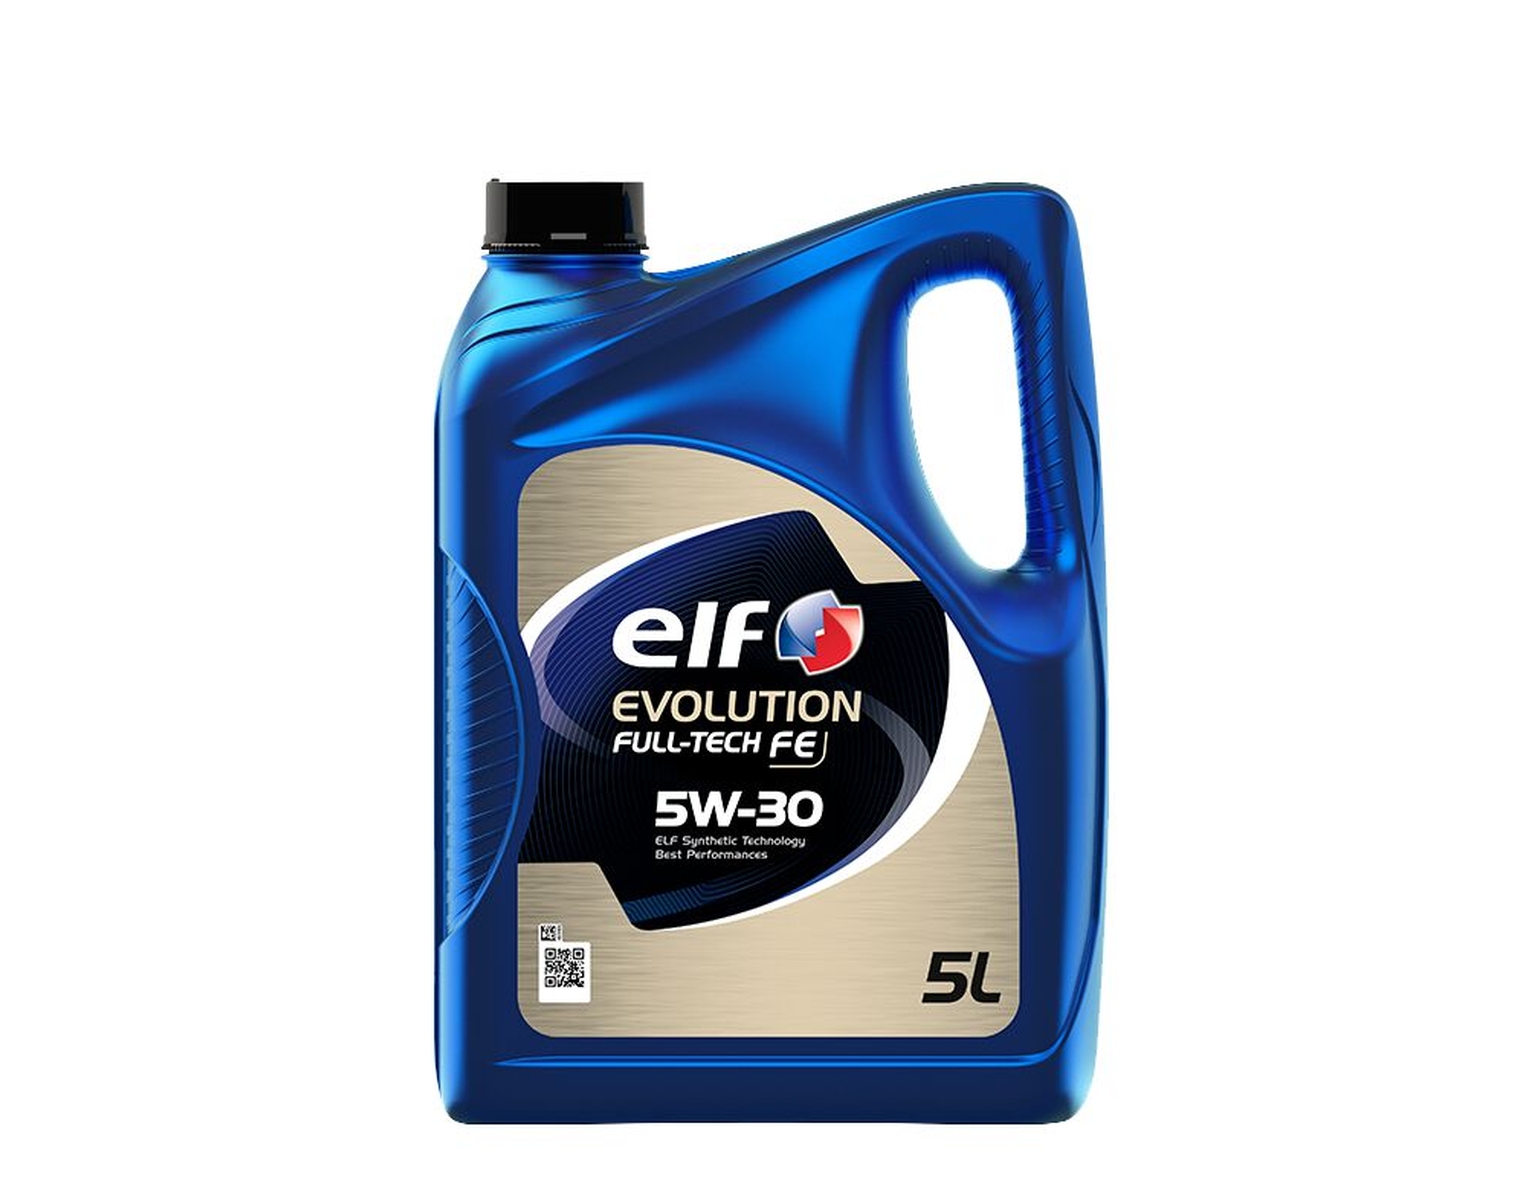 ELF Evolution Full Tech FE 5W/30, bidone da 5 litri